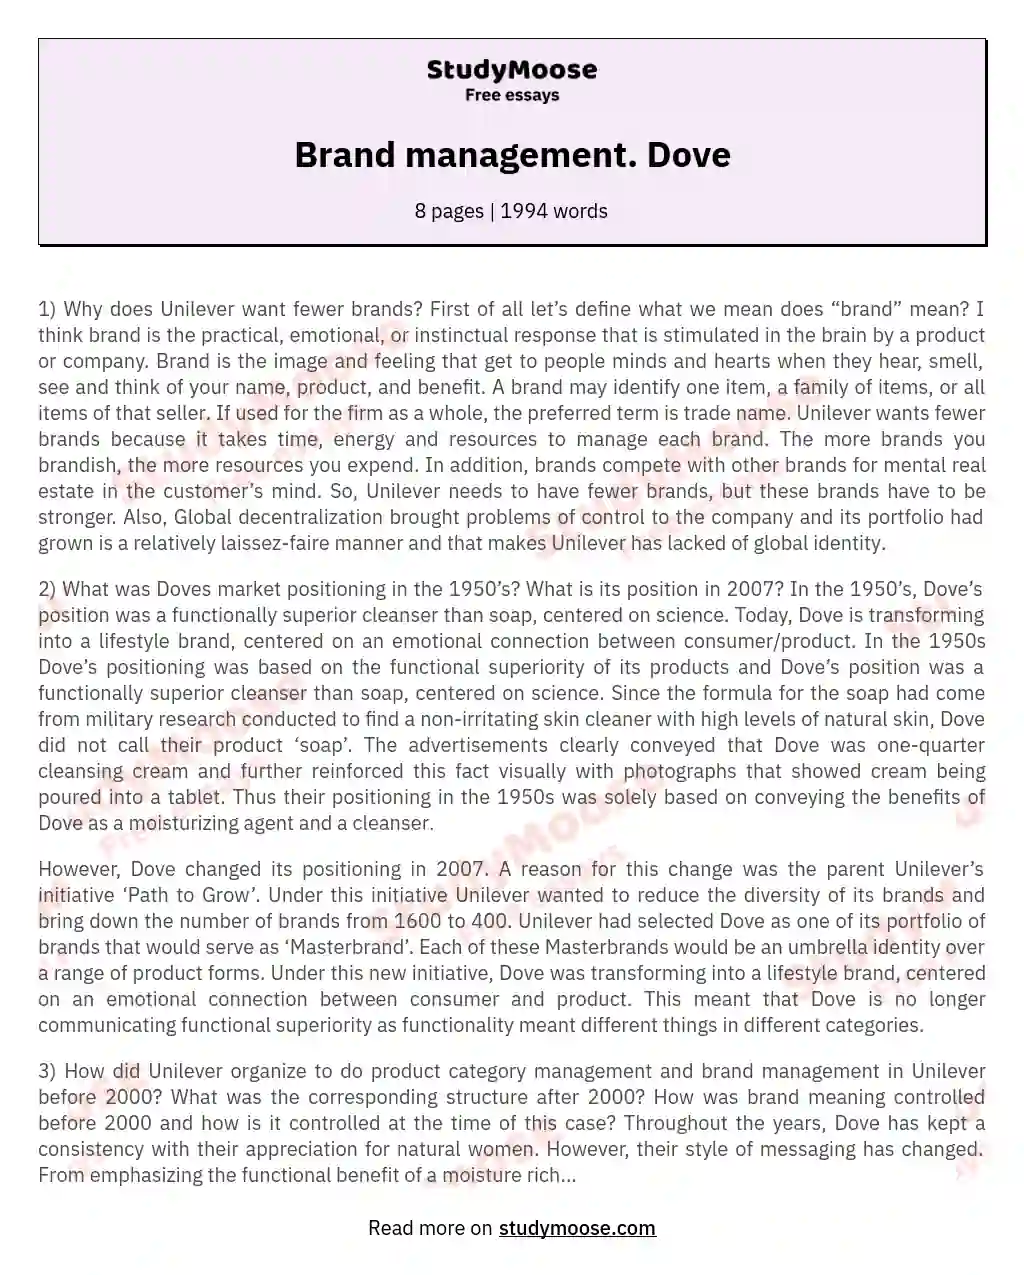 Brand management. Dove essay